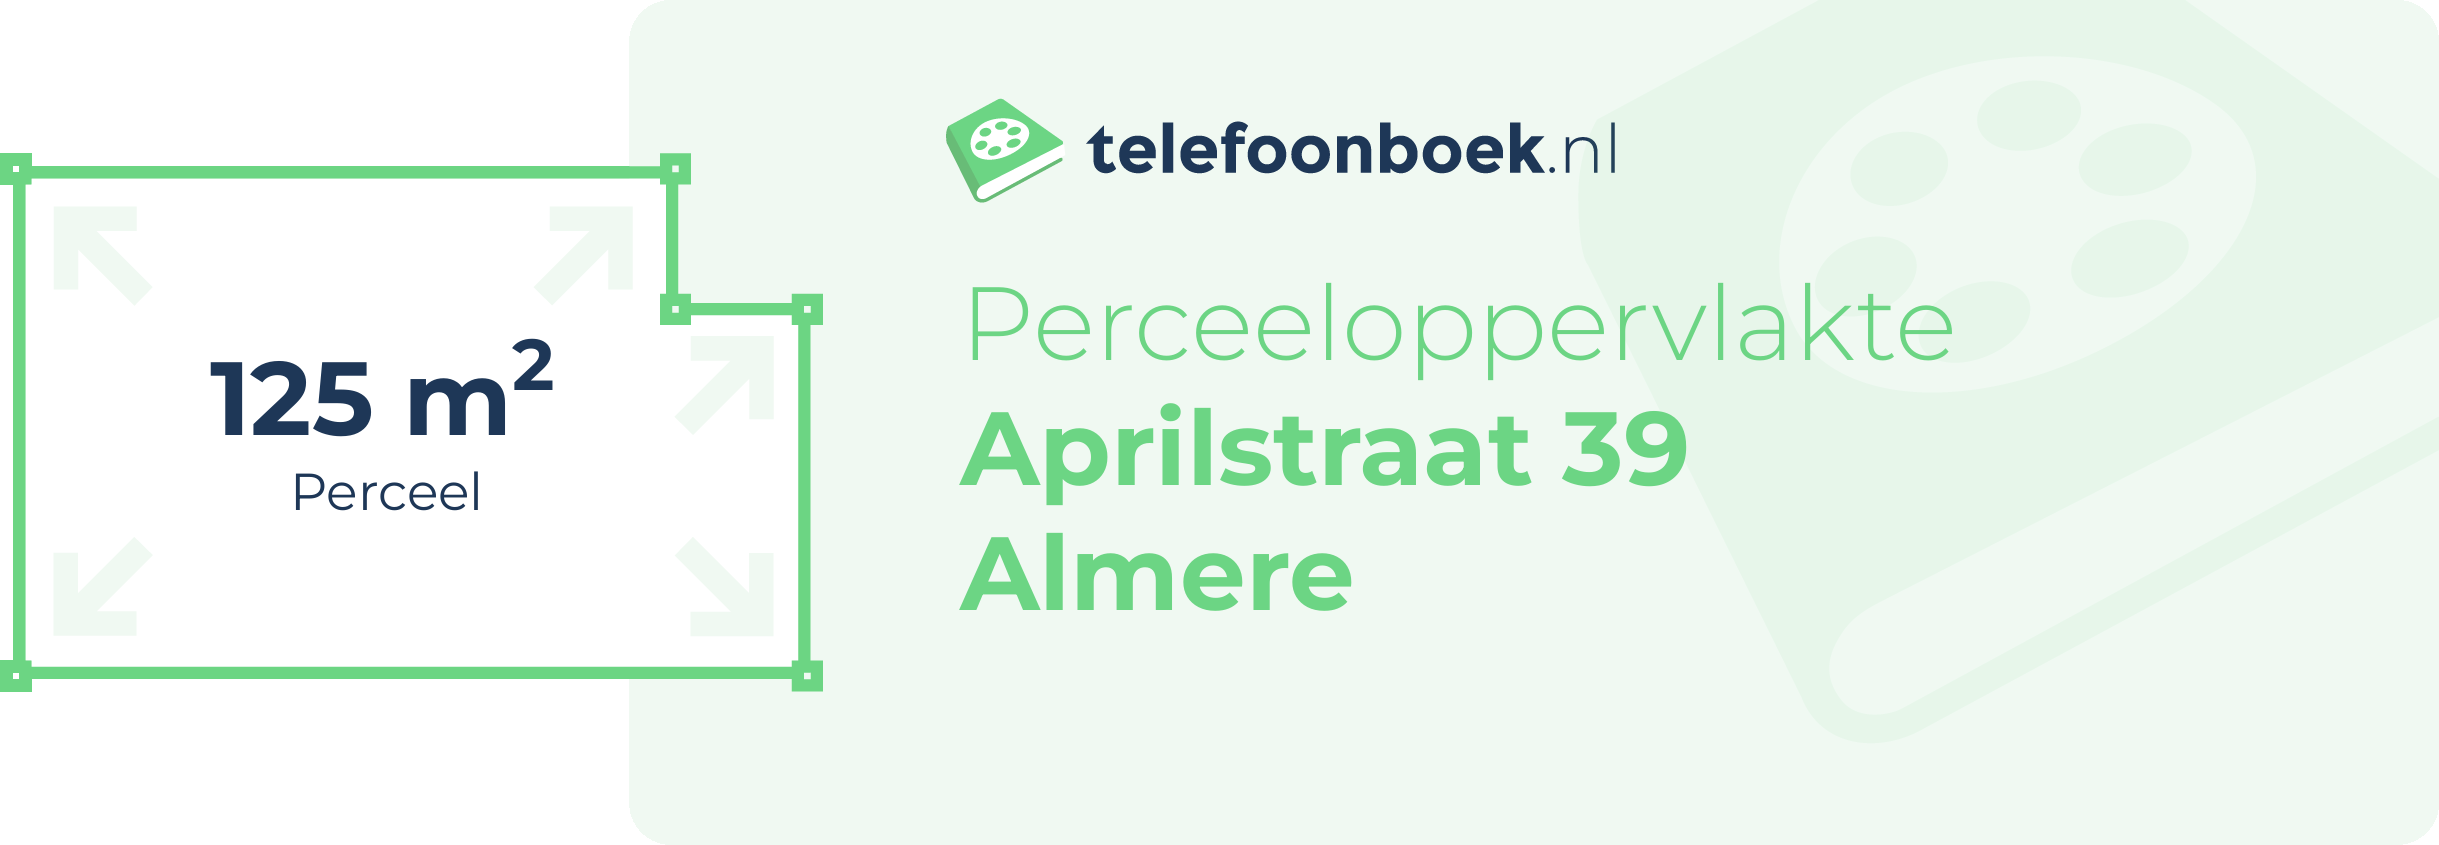 Perceeloppervlakte Aprilstraat 39 Almere